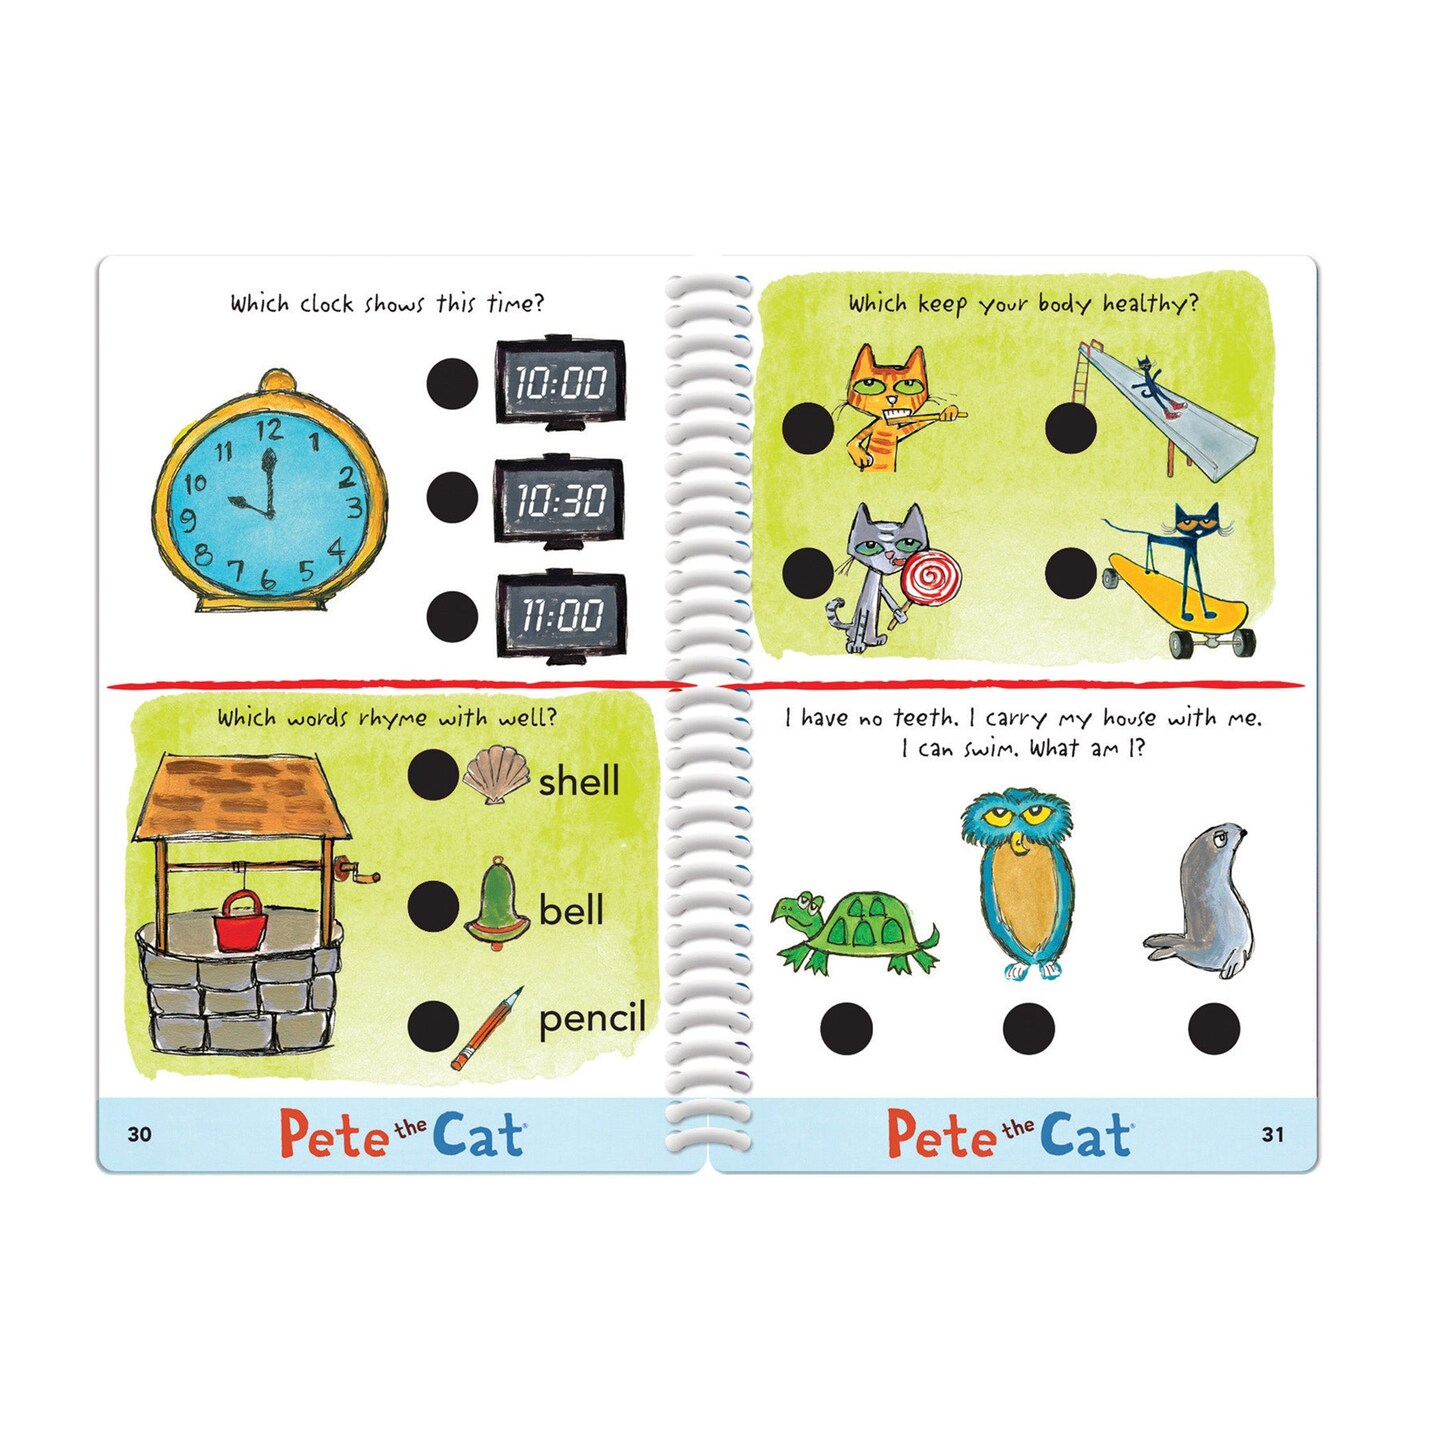 Hot Dots&#xAE; Jr. Pete the Cat&#xAE; I Love Kindergarten! Set